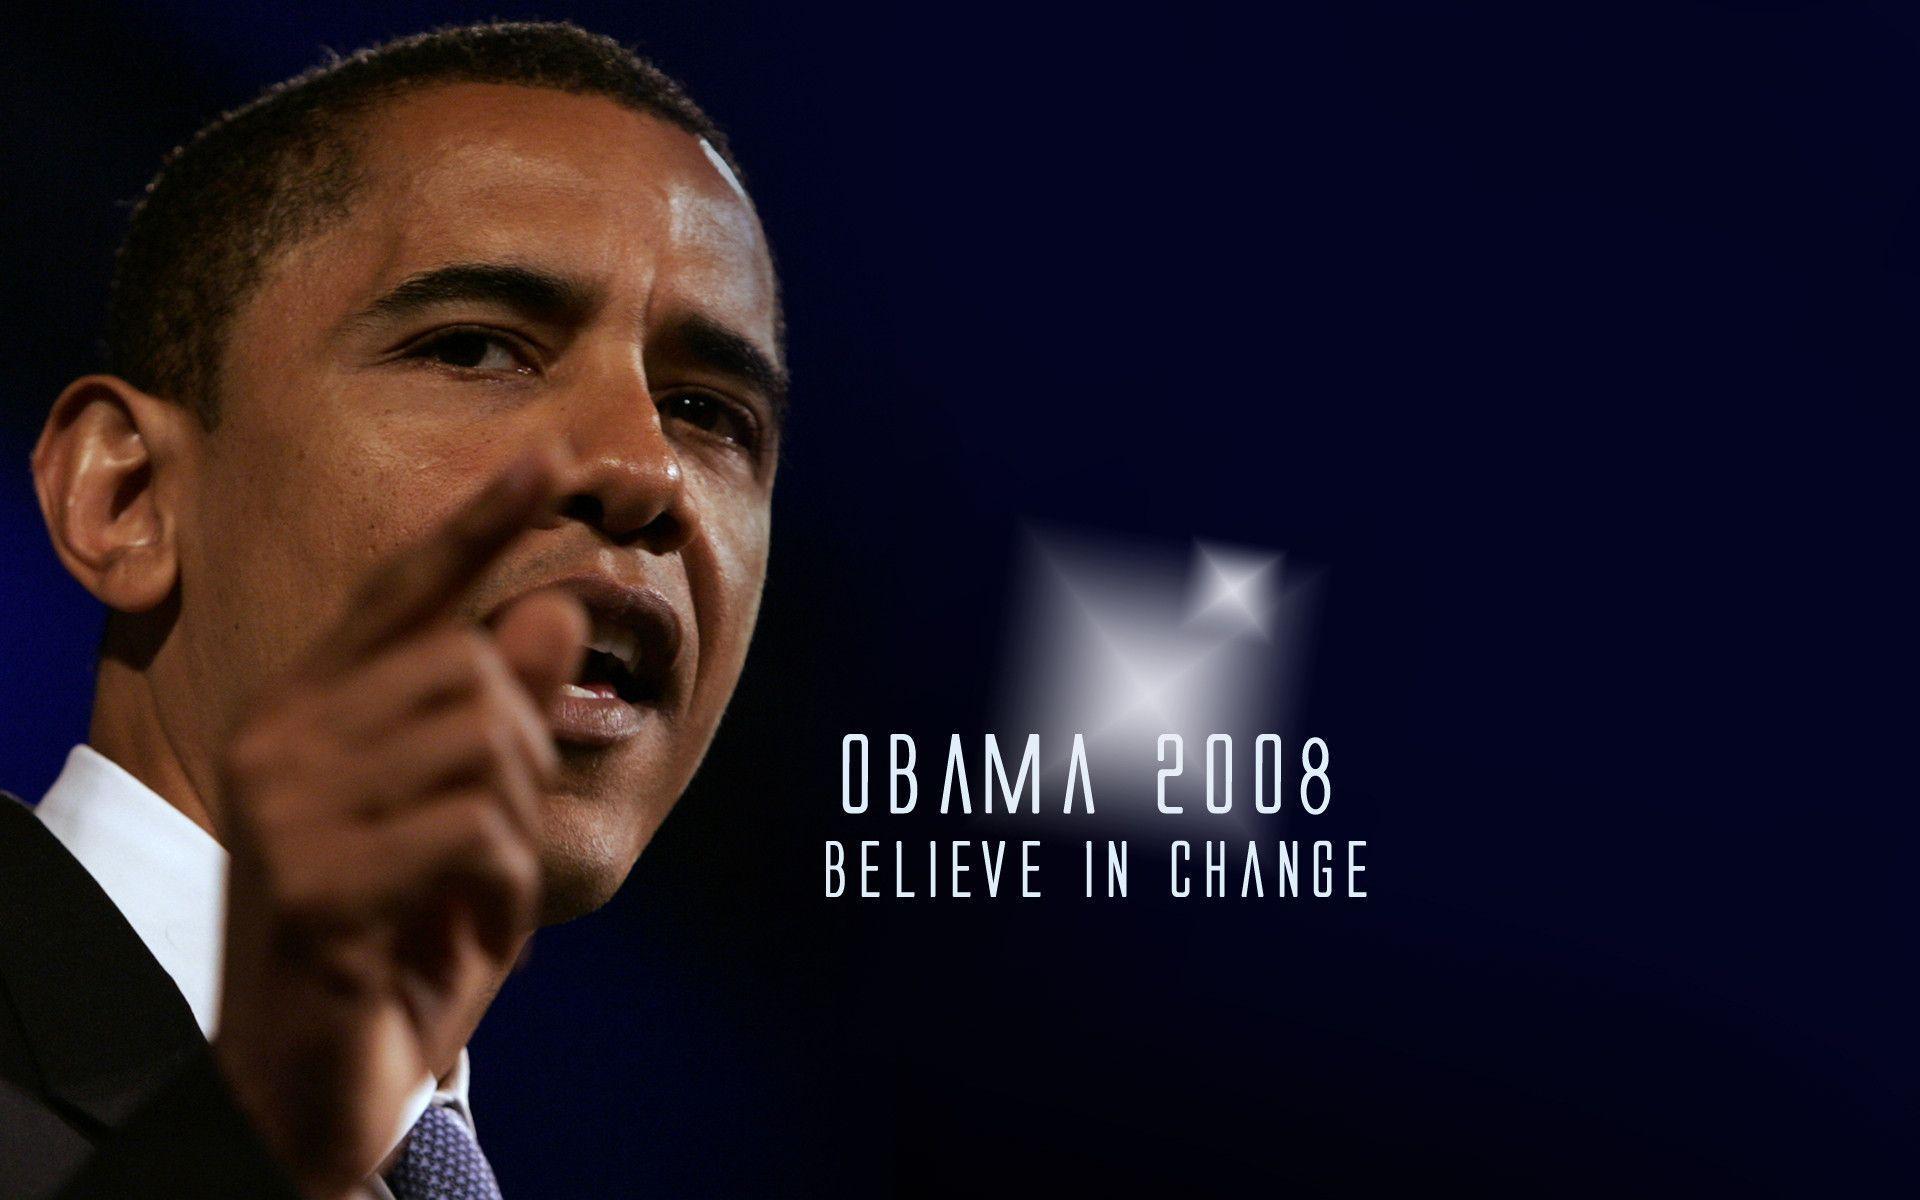 Barack Obama Quotes wallpaper